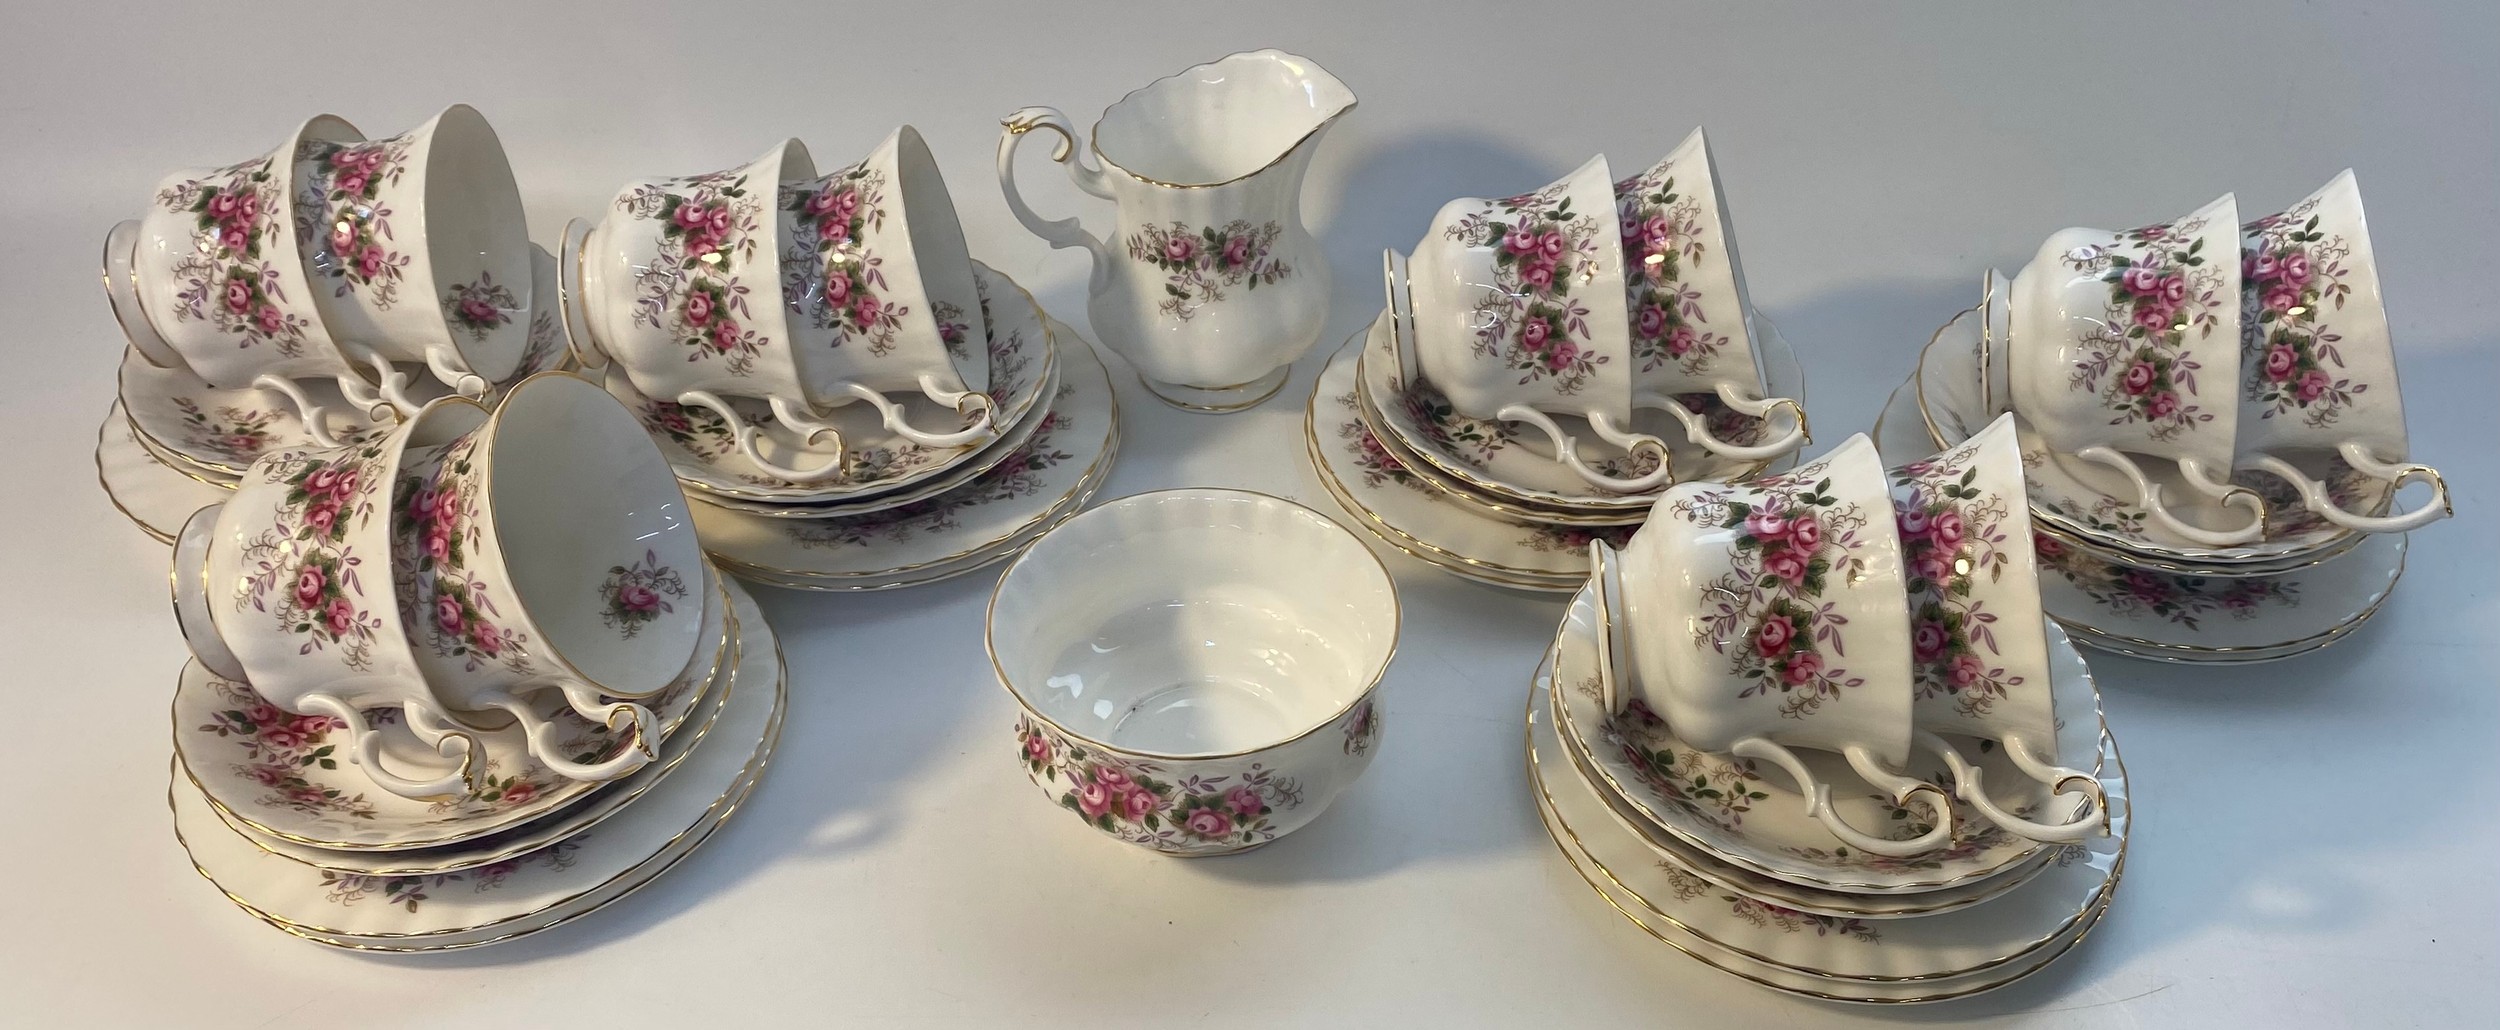 38 piece Royal Albert Lavender Rose pattern tea service